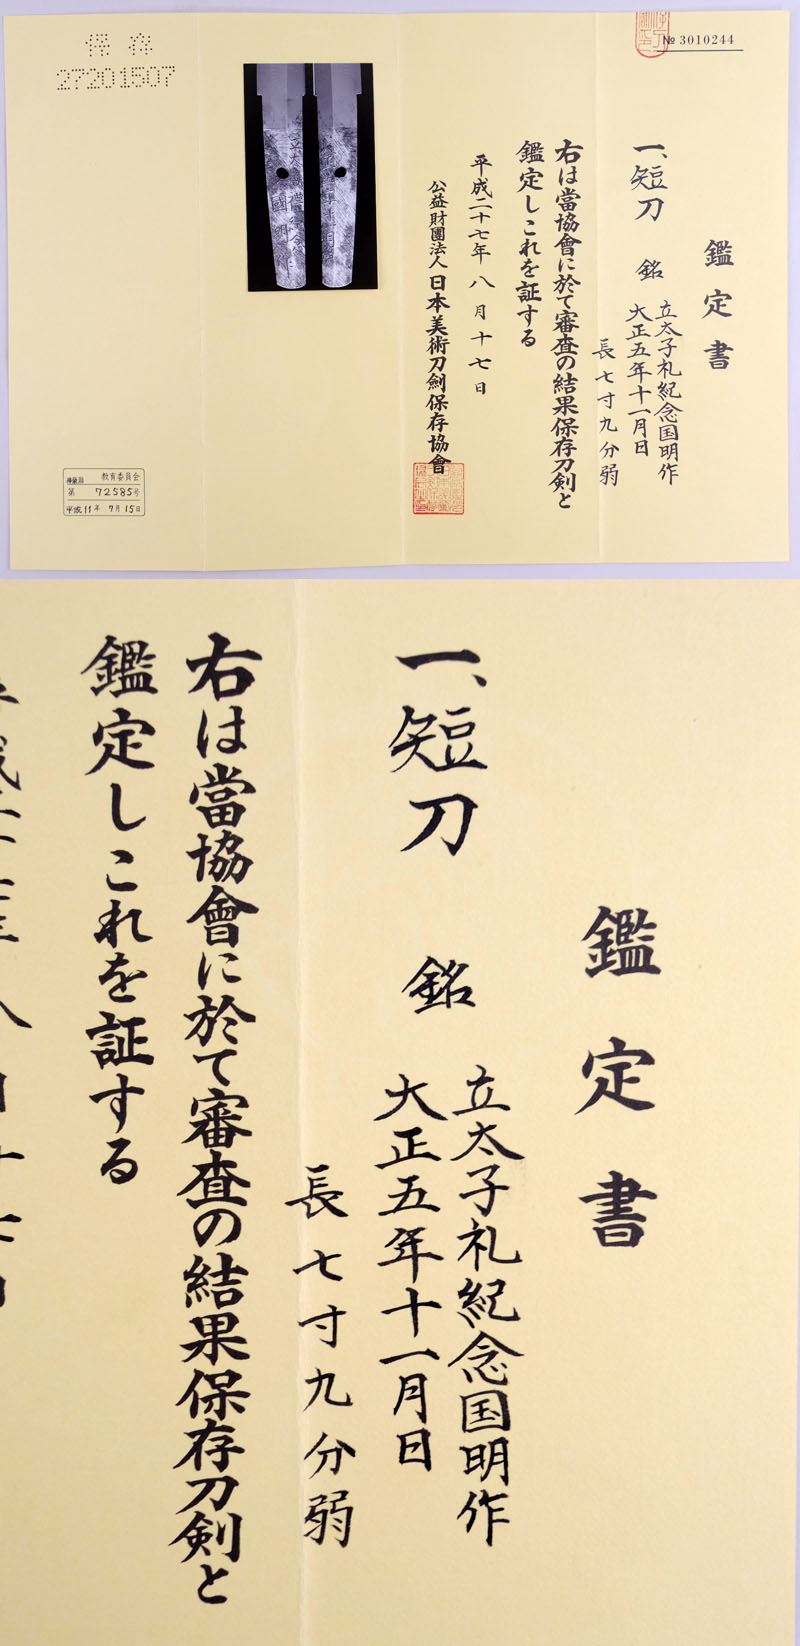 国明作 (沖本国明) Picture of Certificate